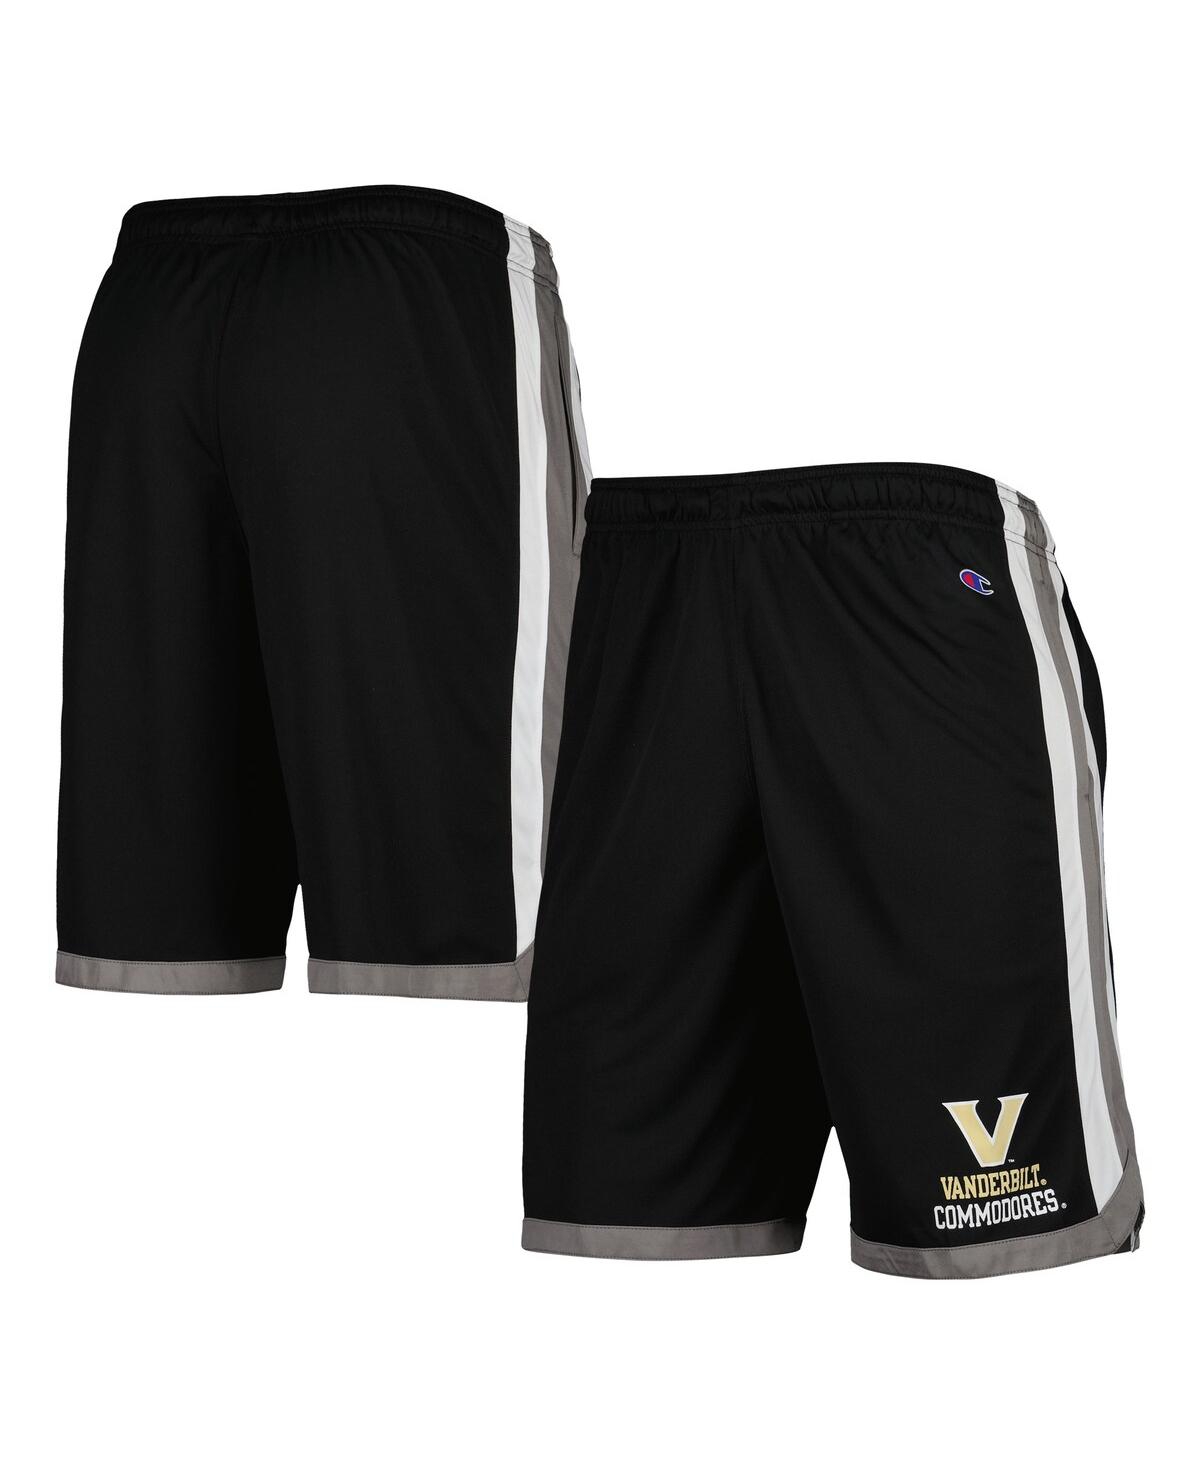 Shop Champion Men's  Black Vanderbilt Commodores Basketball Shorts